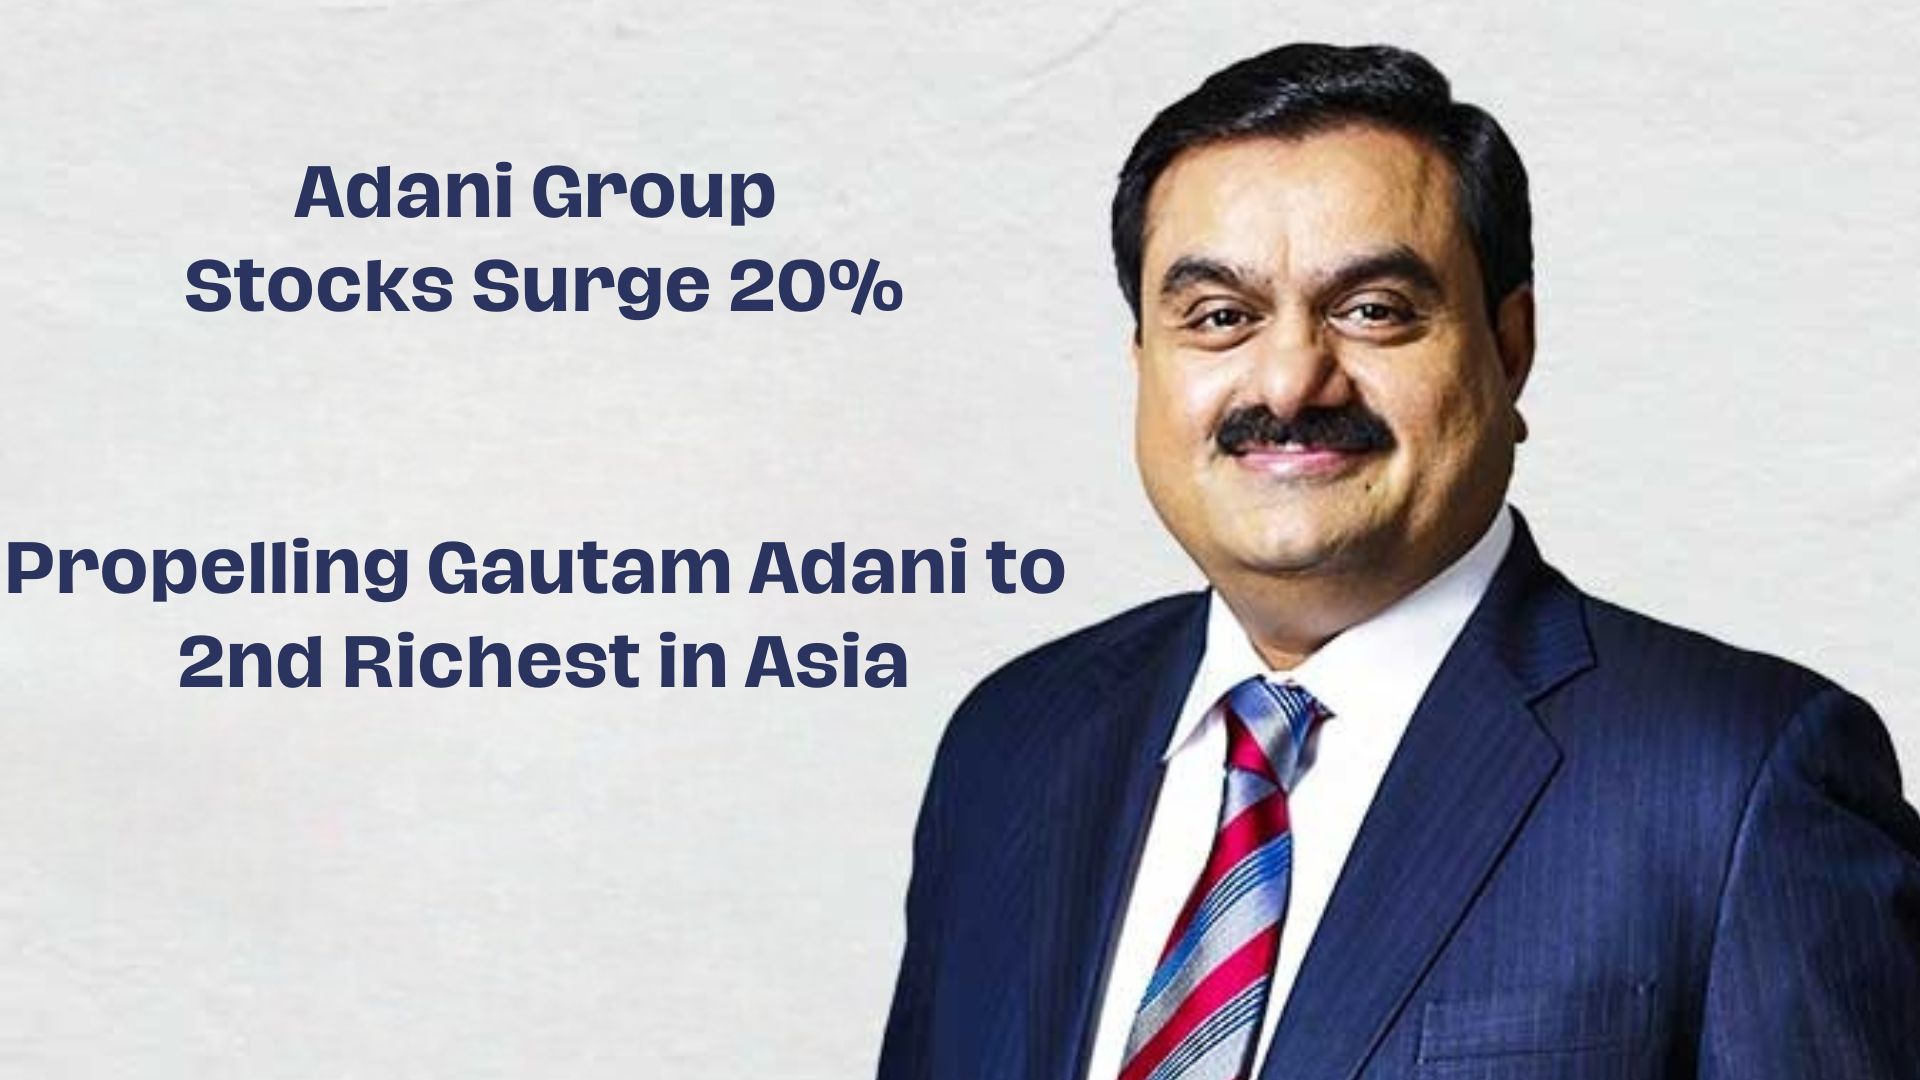 Adani Group Stocks Surge 20%, Propelling Gautam Adani to Second Richest in Asia